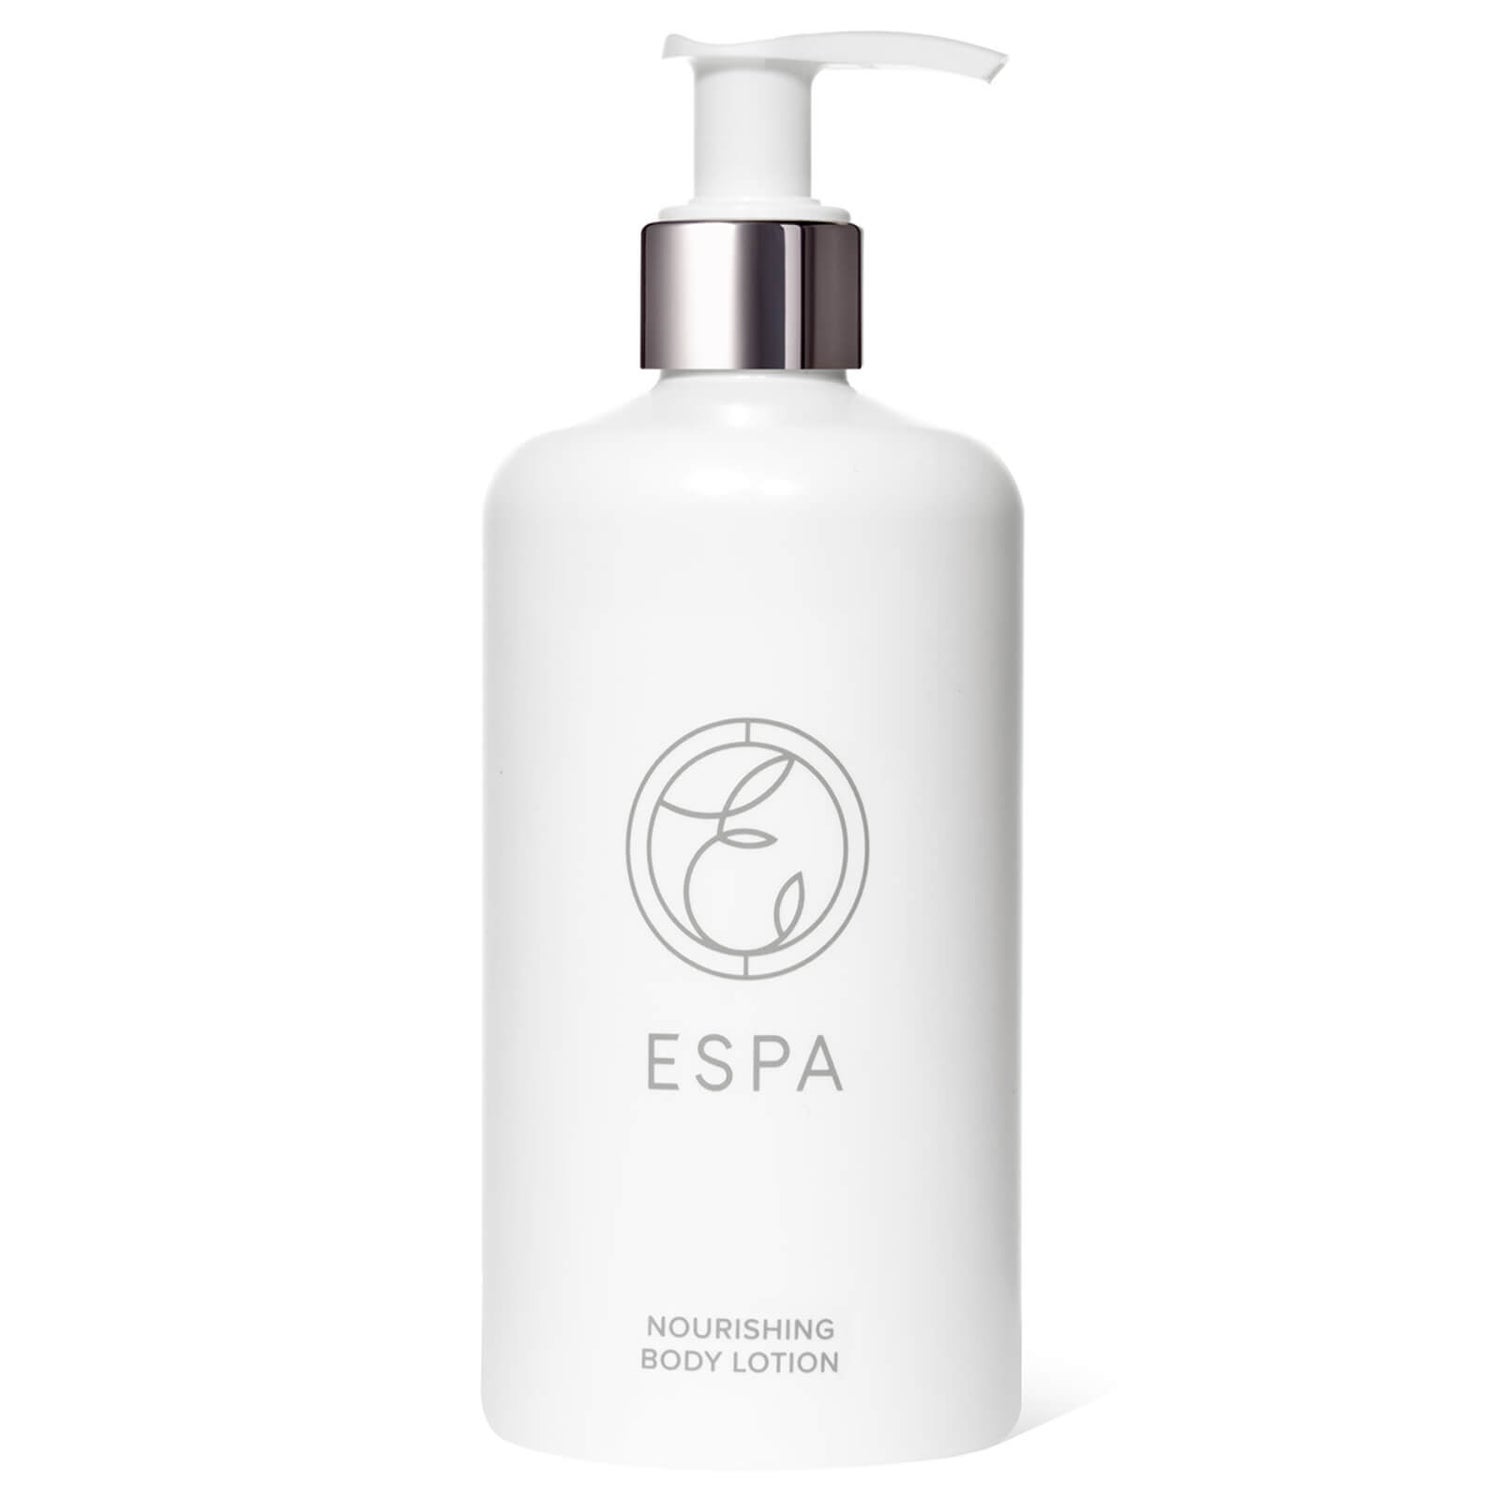 Espa Espa Essentials Body Lotion 400ml Refill Plastic Bottle Gratis Lieferservice Weltweit